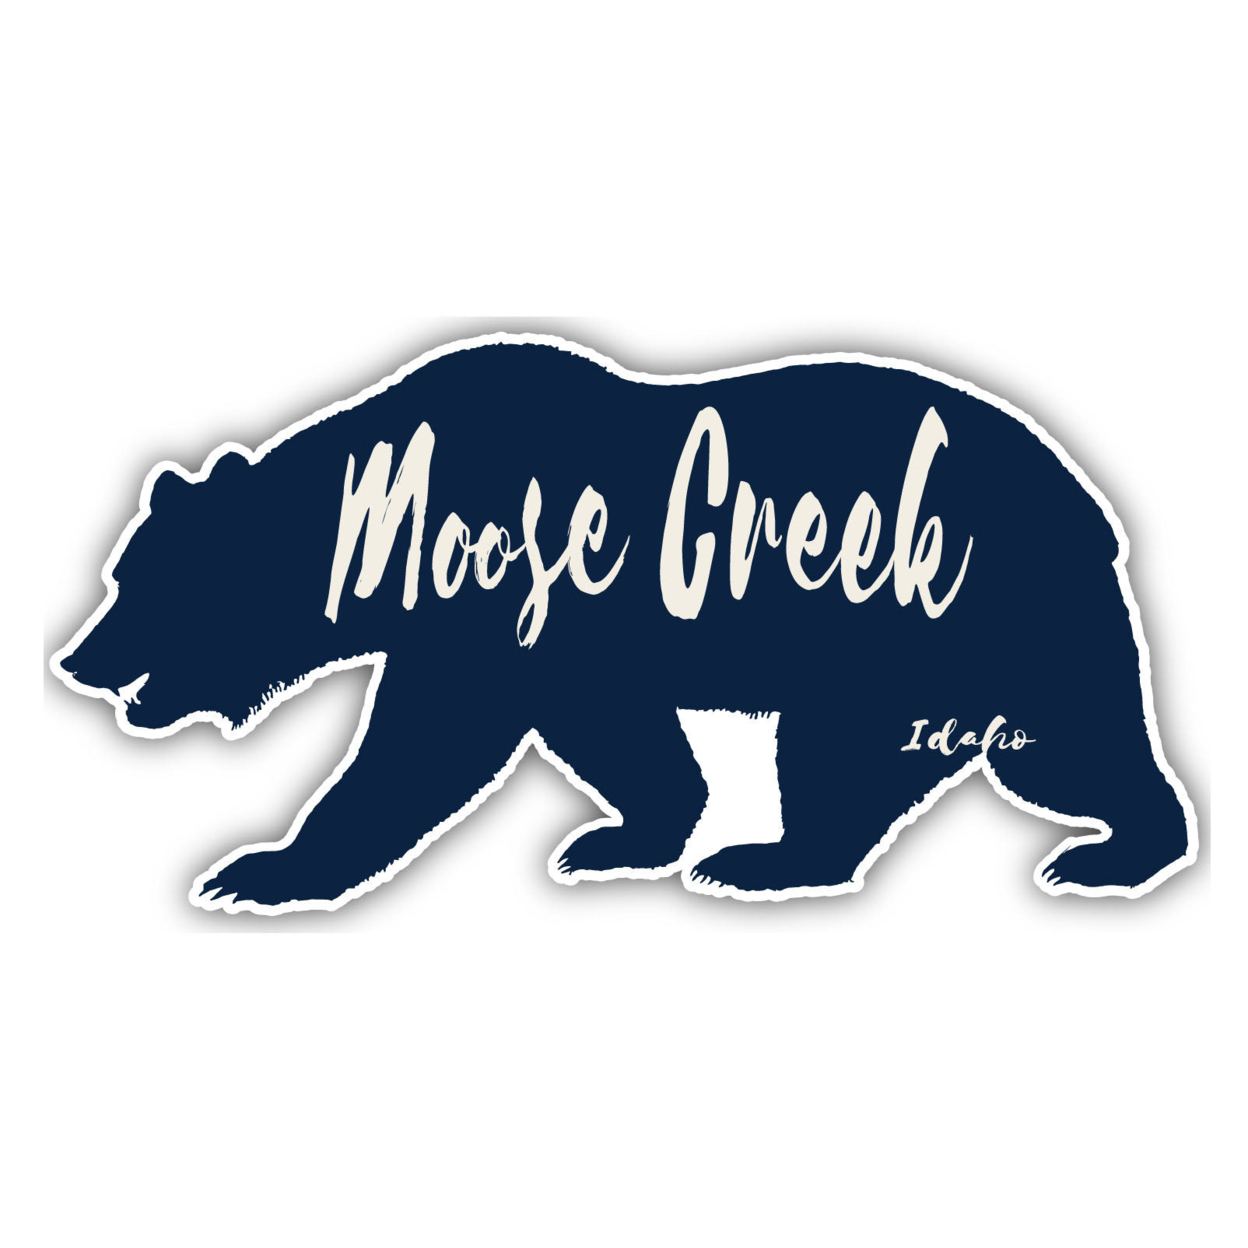 Moose Creek Idaho Souvenir Decorative Stickers (Choose Theme And Size) - Single Unit, 2-Inch, Bear